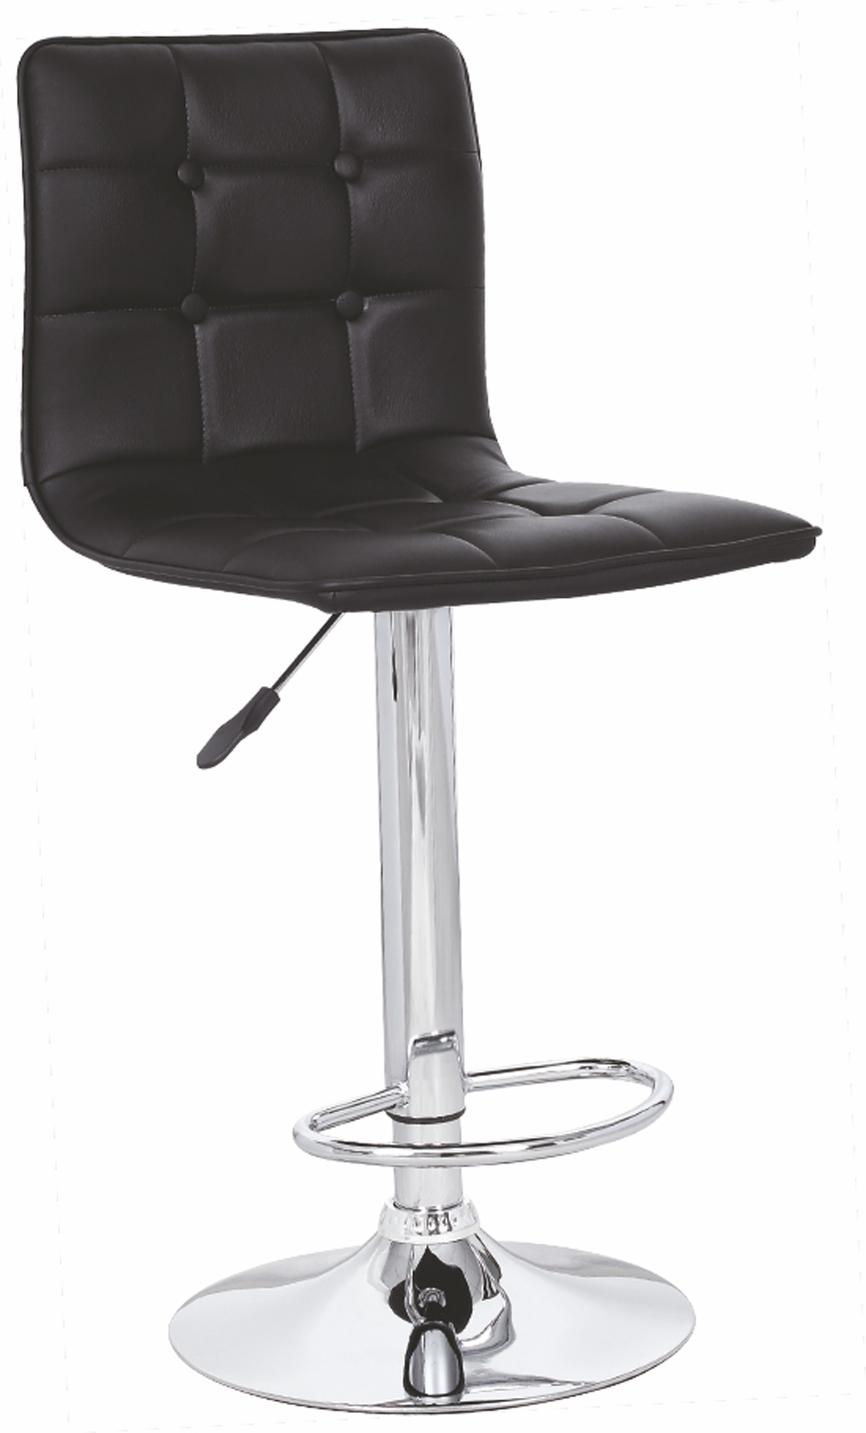 H29 bar stool color: black